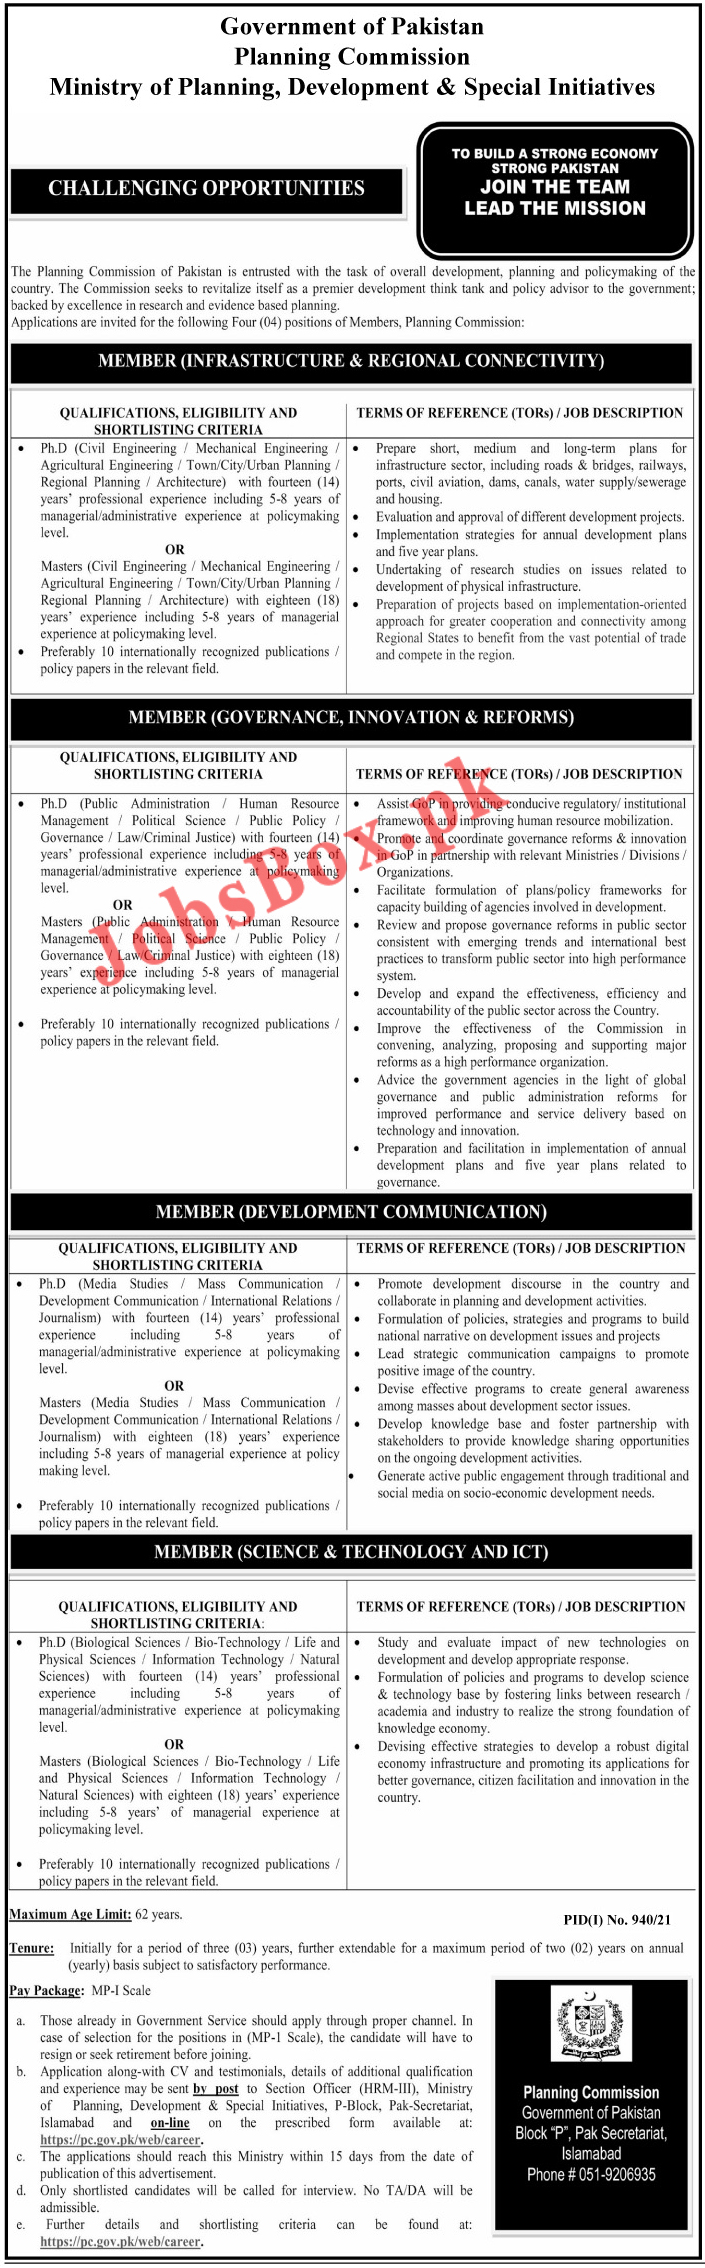 Planning Commission of Pakistan PC Jobs 2021 - www.pc.gov.pk